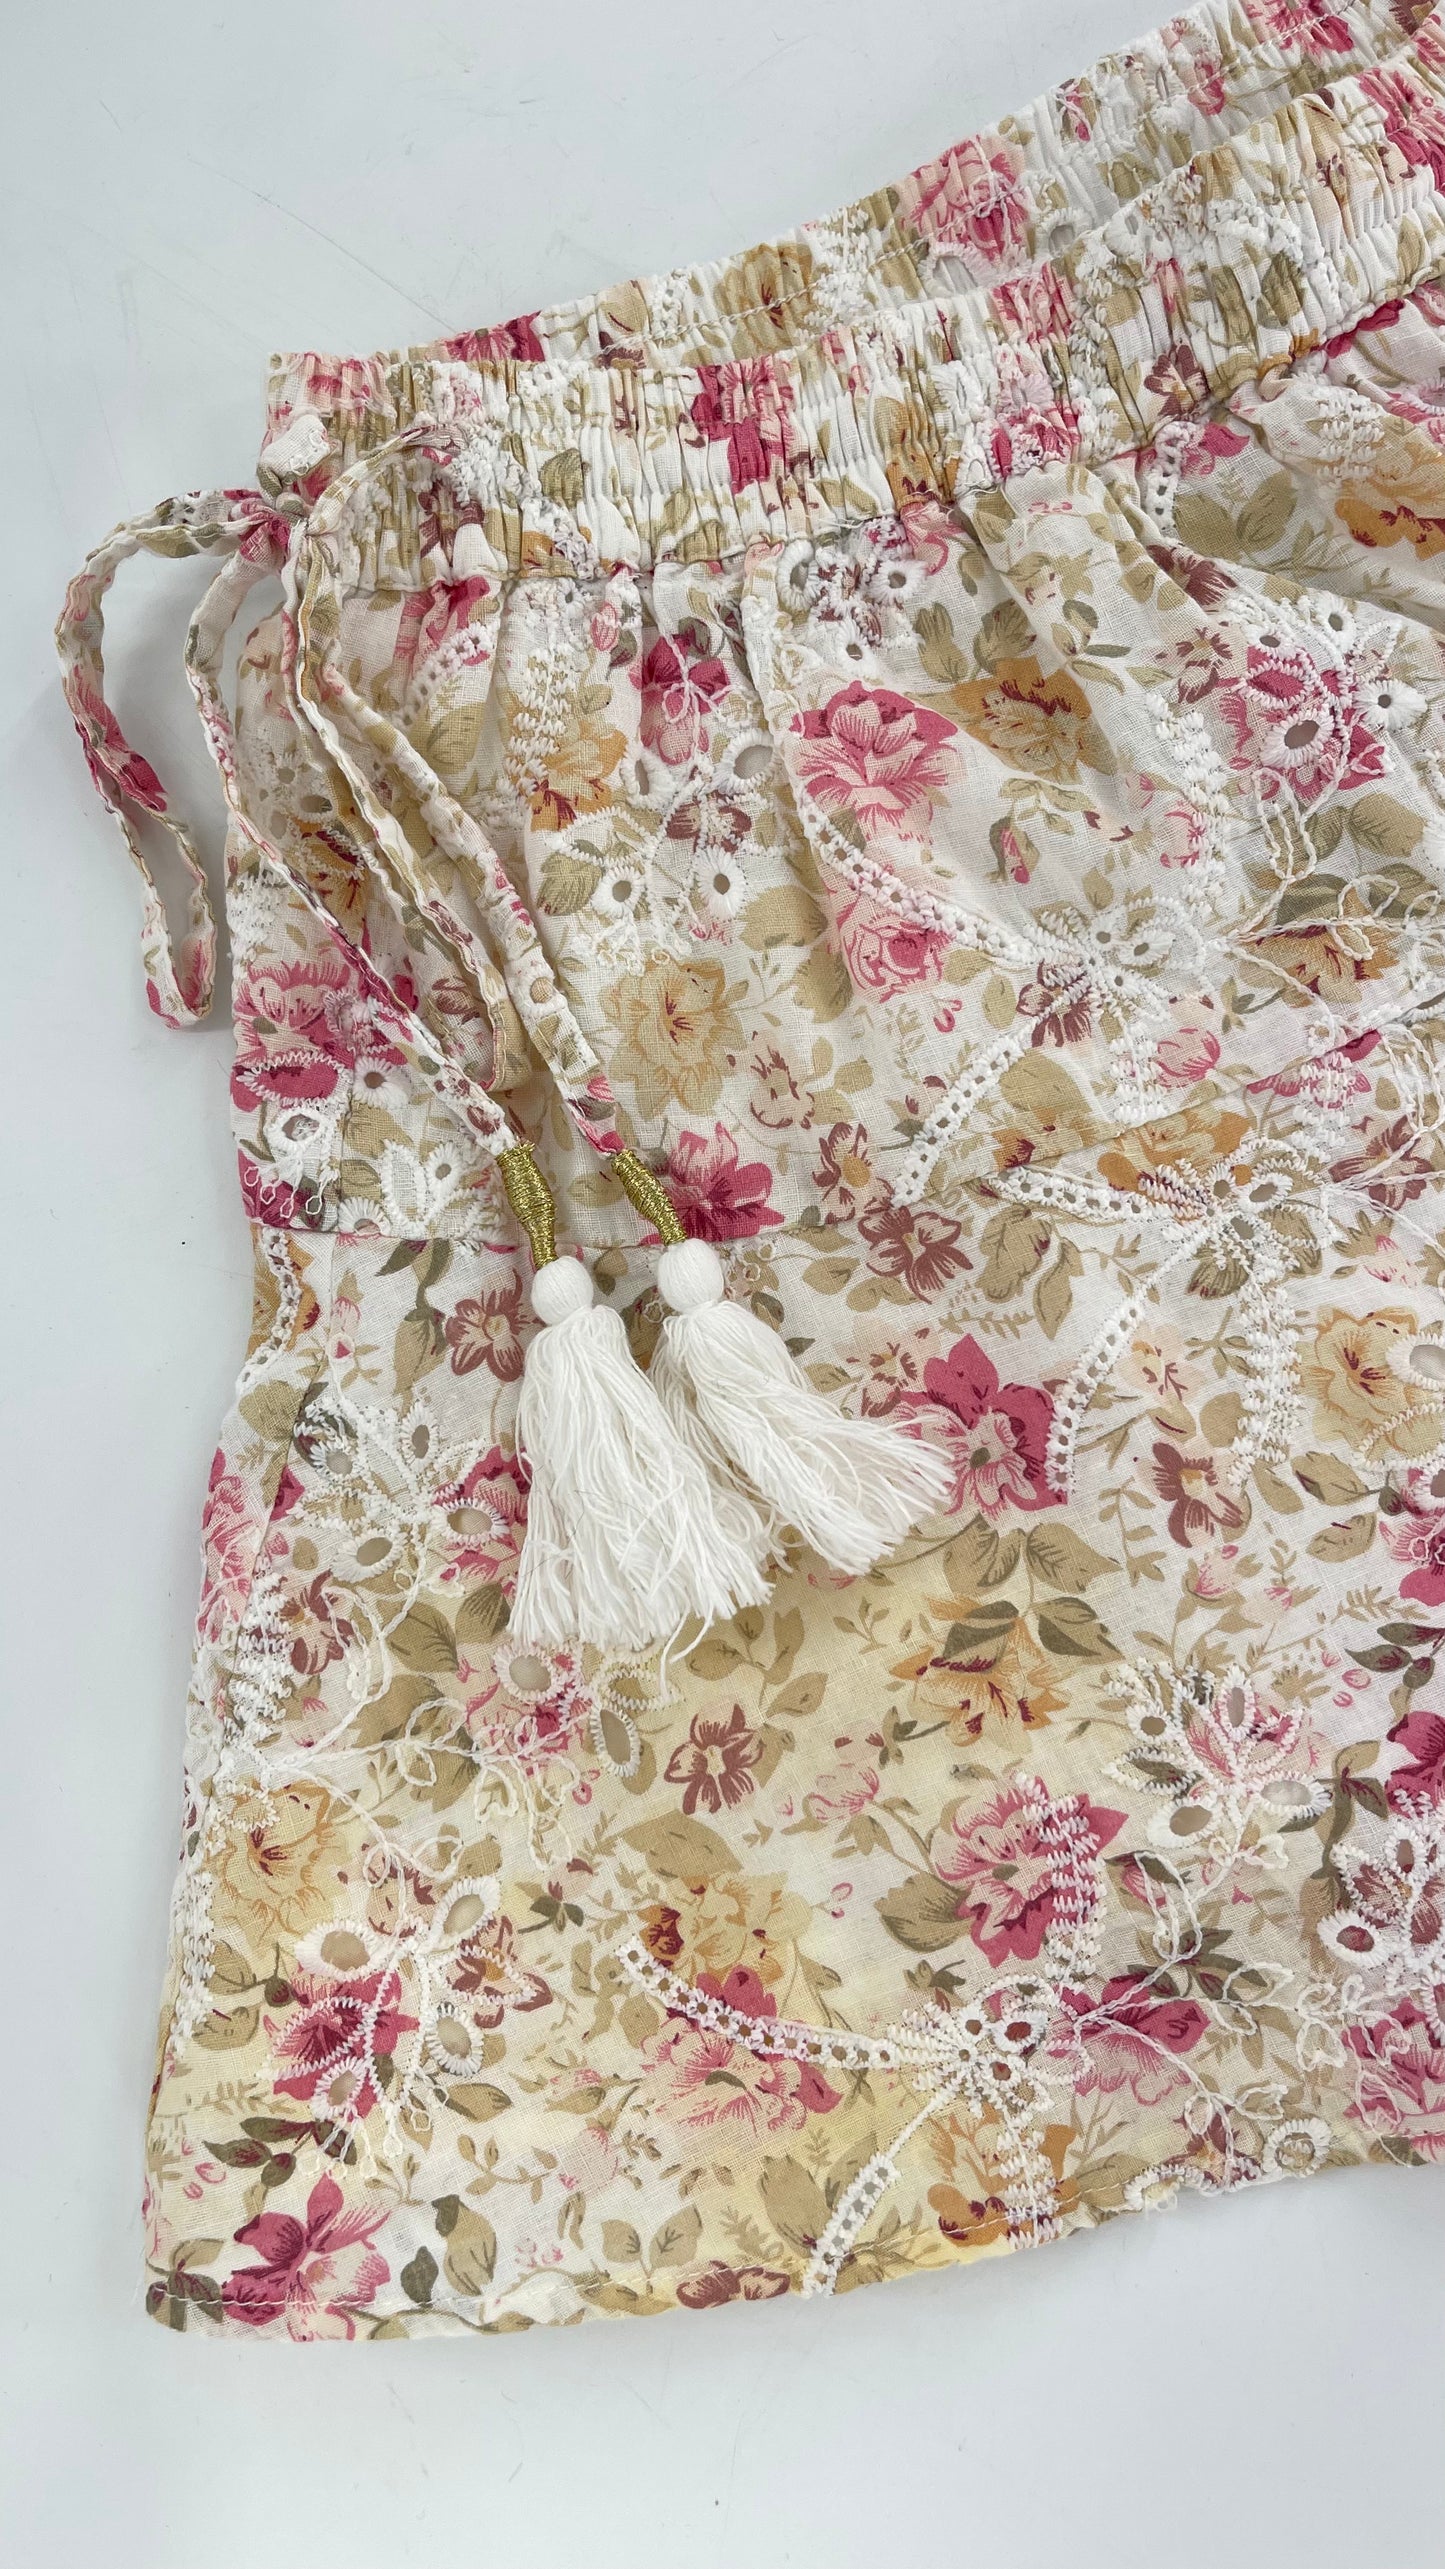 MINKPINK Romantic Floral Lace Tie Side Tassel Shorts (Medium)